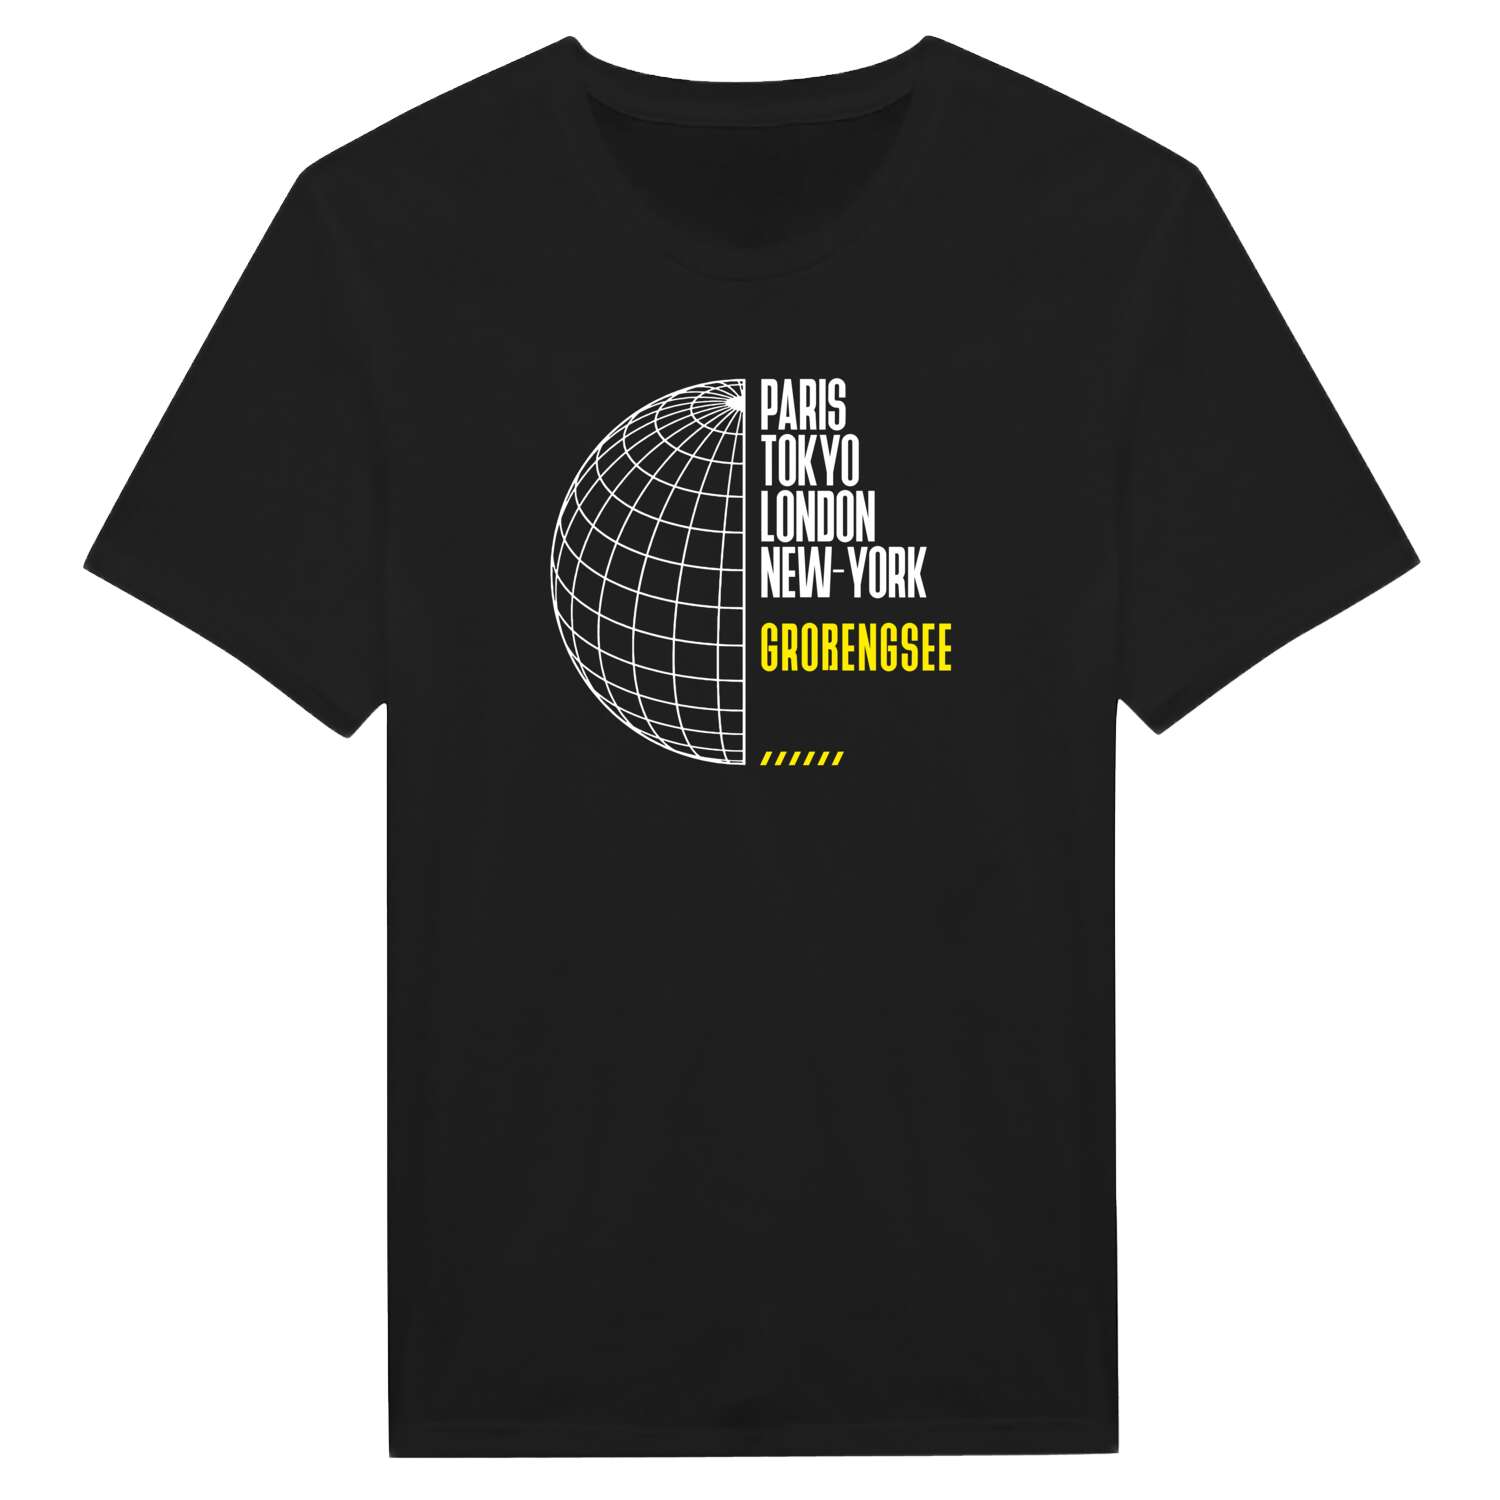 Großengsee T-Shirt »Paris Tokyo London«